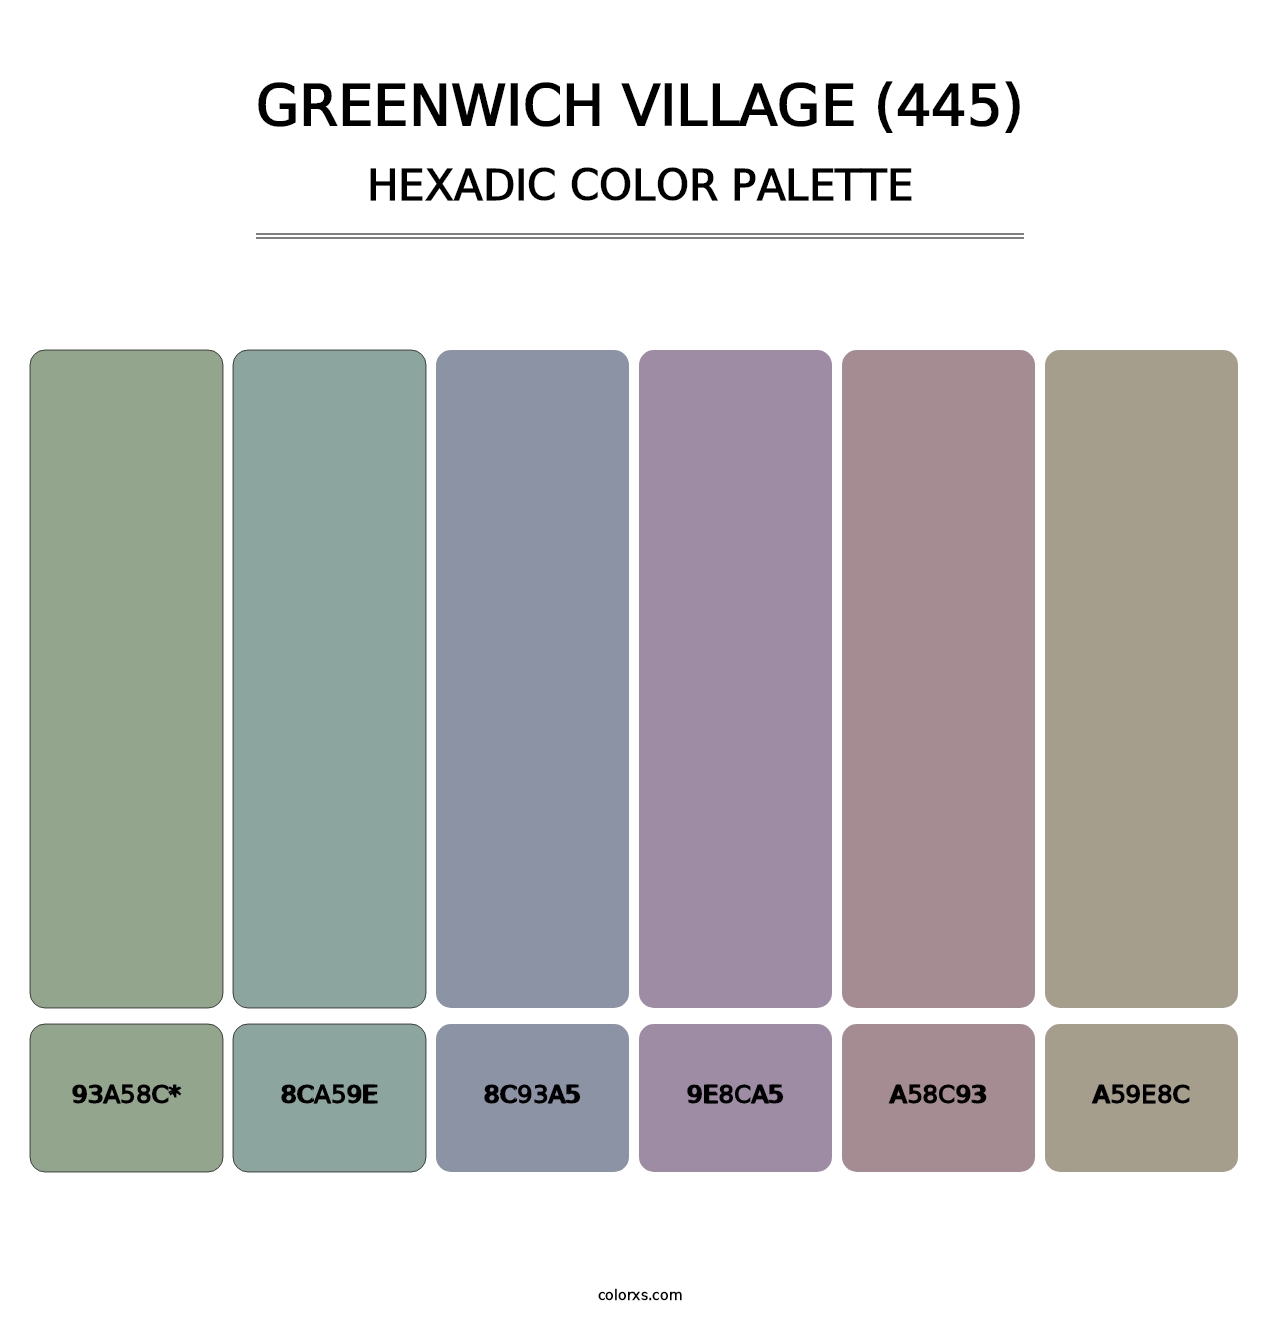 Greenwich Village (445) - Hexadic Color Palette